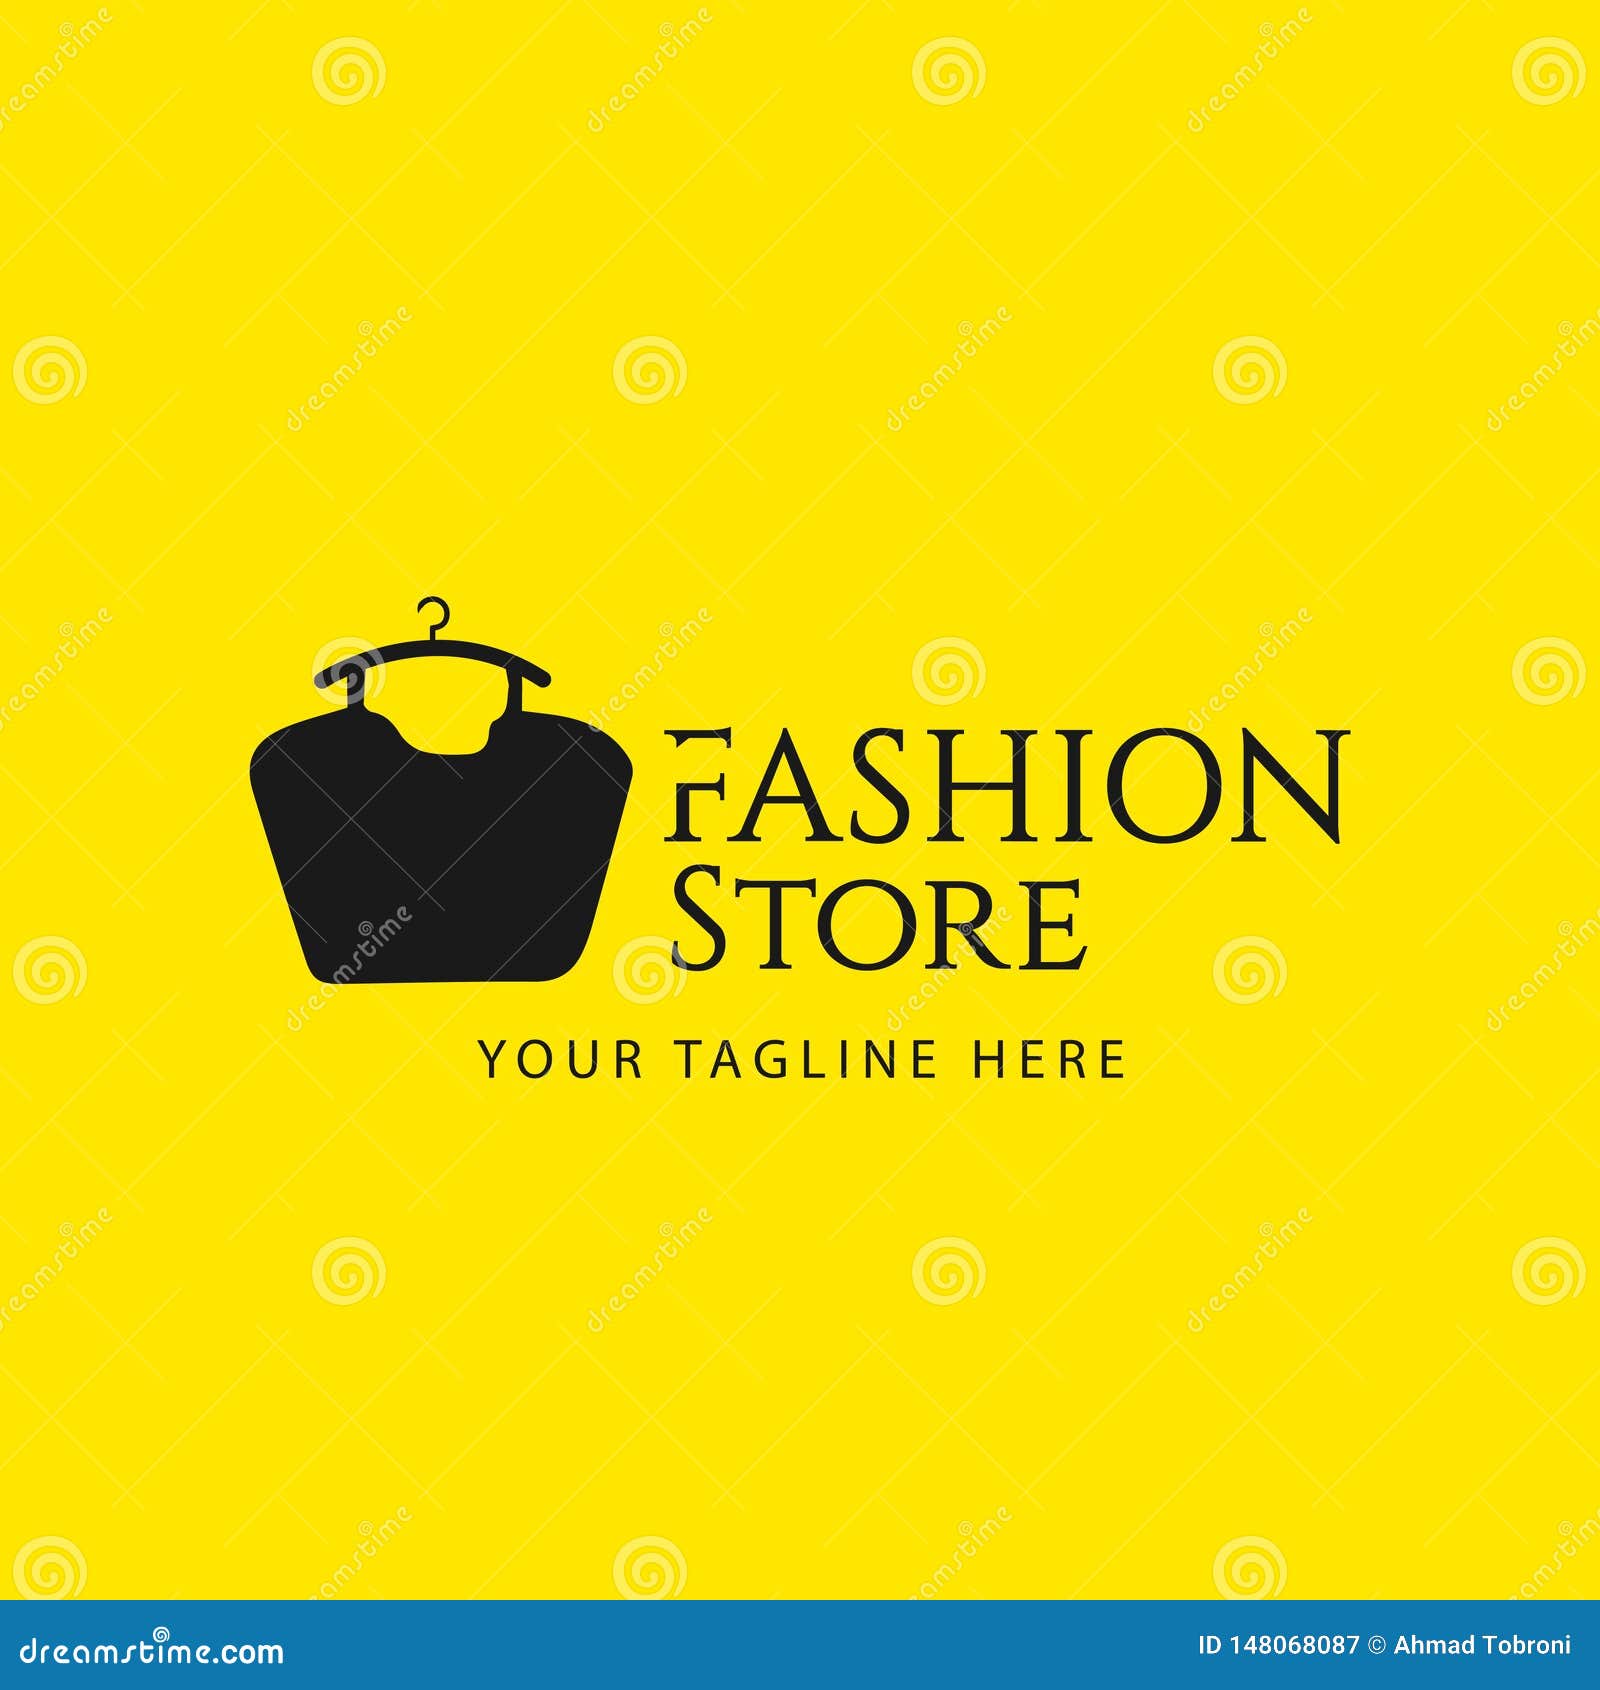 Fashion Store Vector Template Design Illustration Stock Vector ...